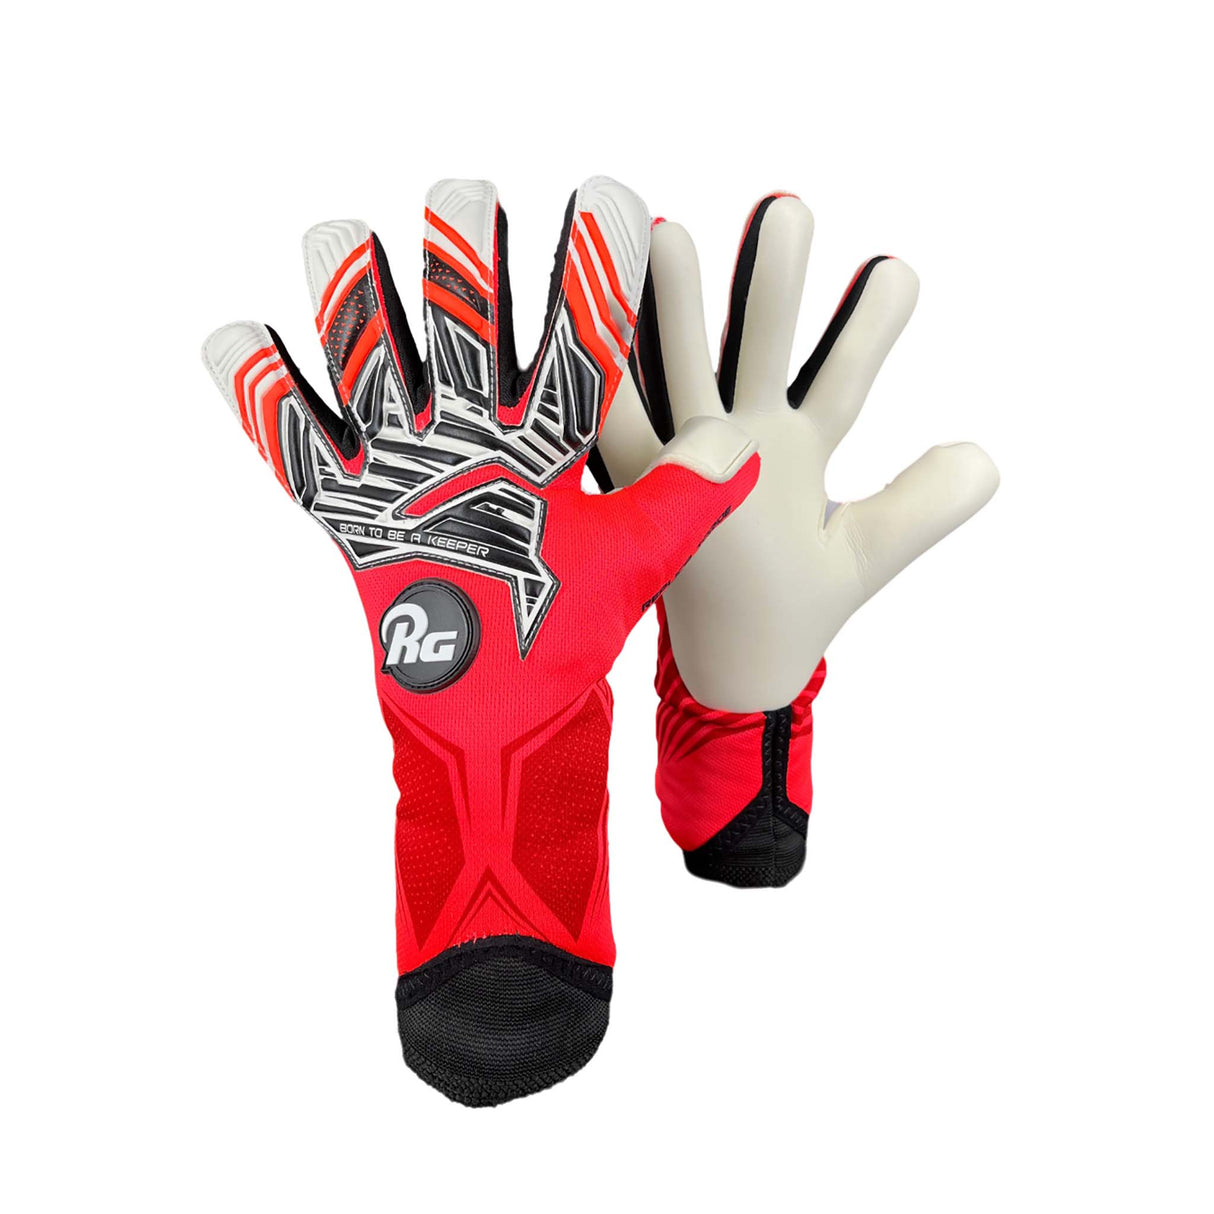 RG Goalkeeper gloves Toride Replica gants de gardien de but de soccer paire